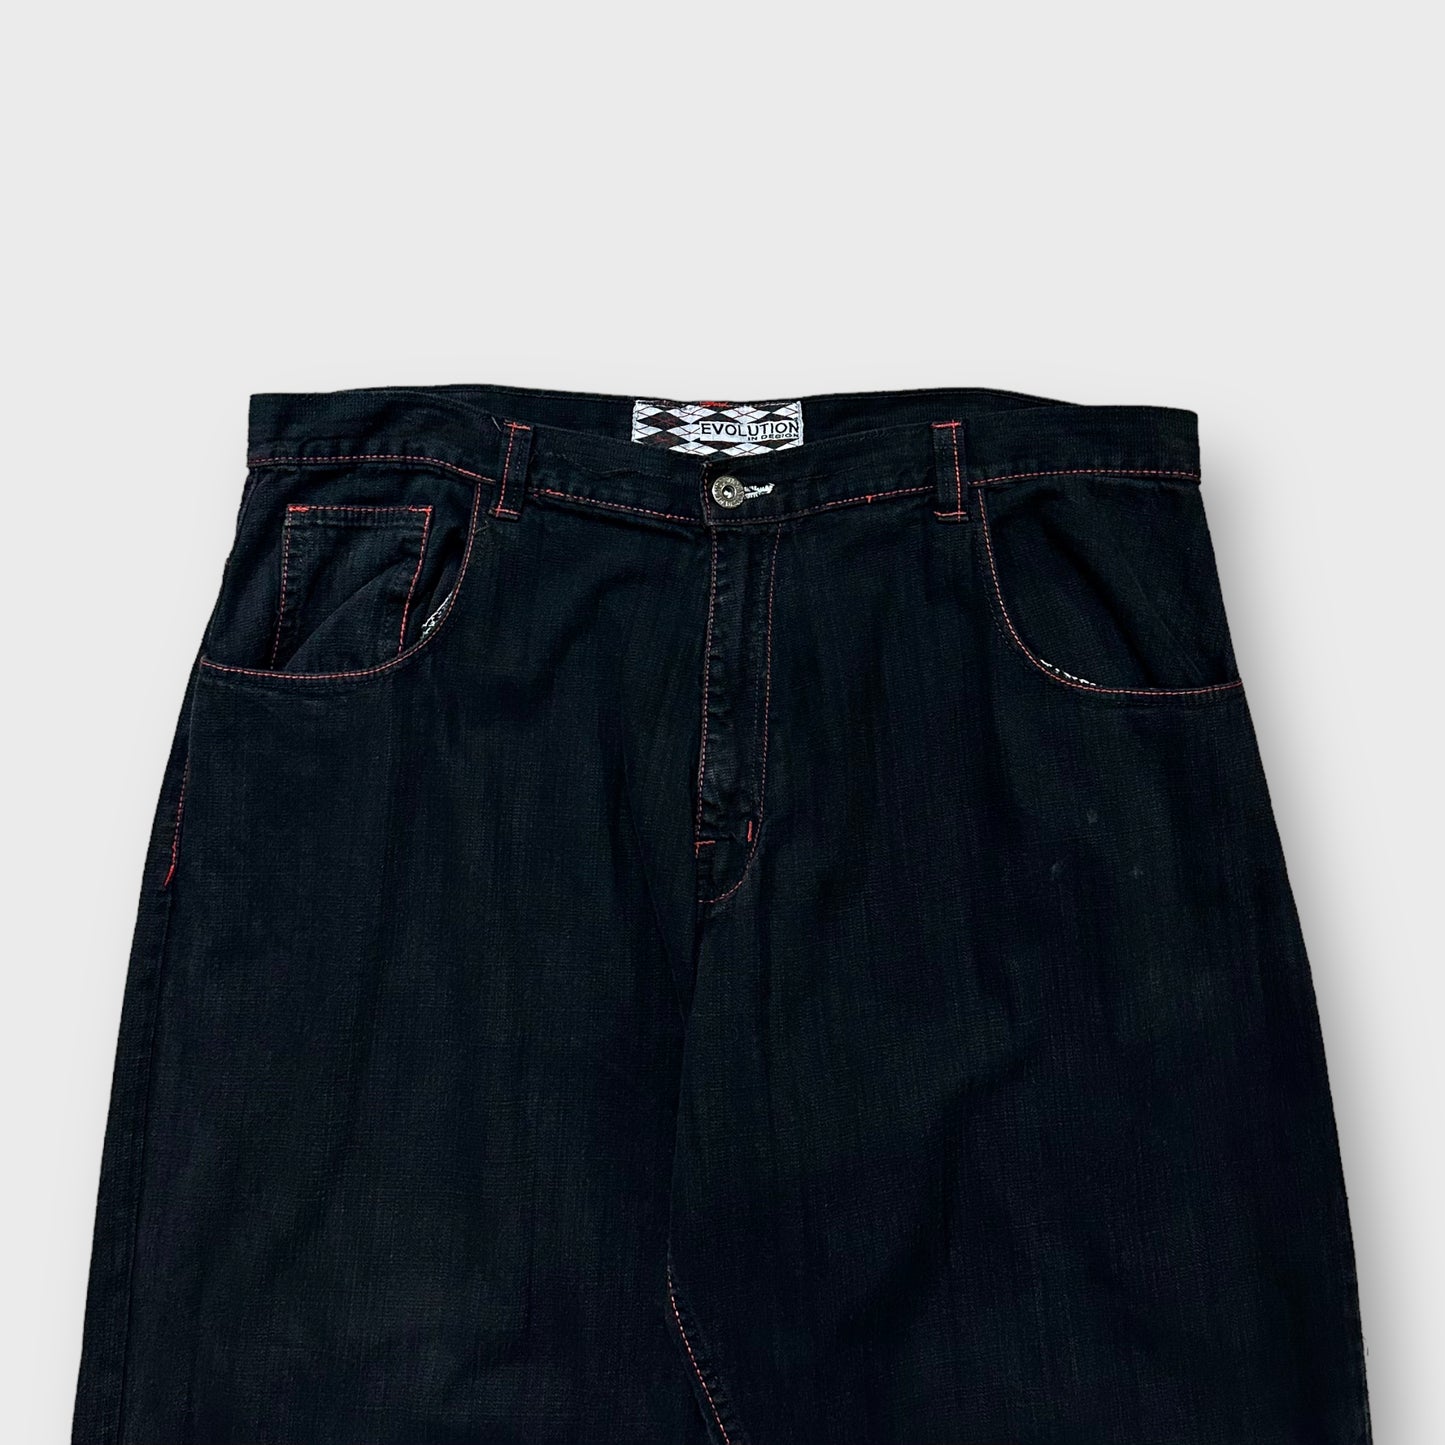 Argyle design black color wide denim pants